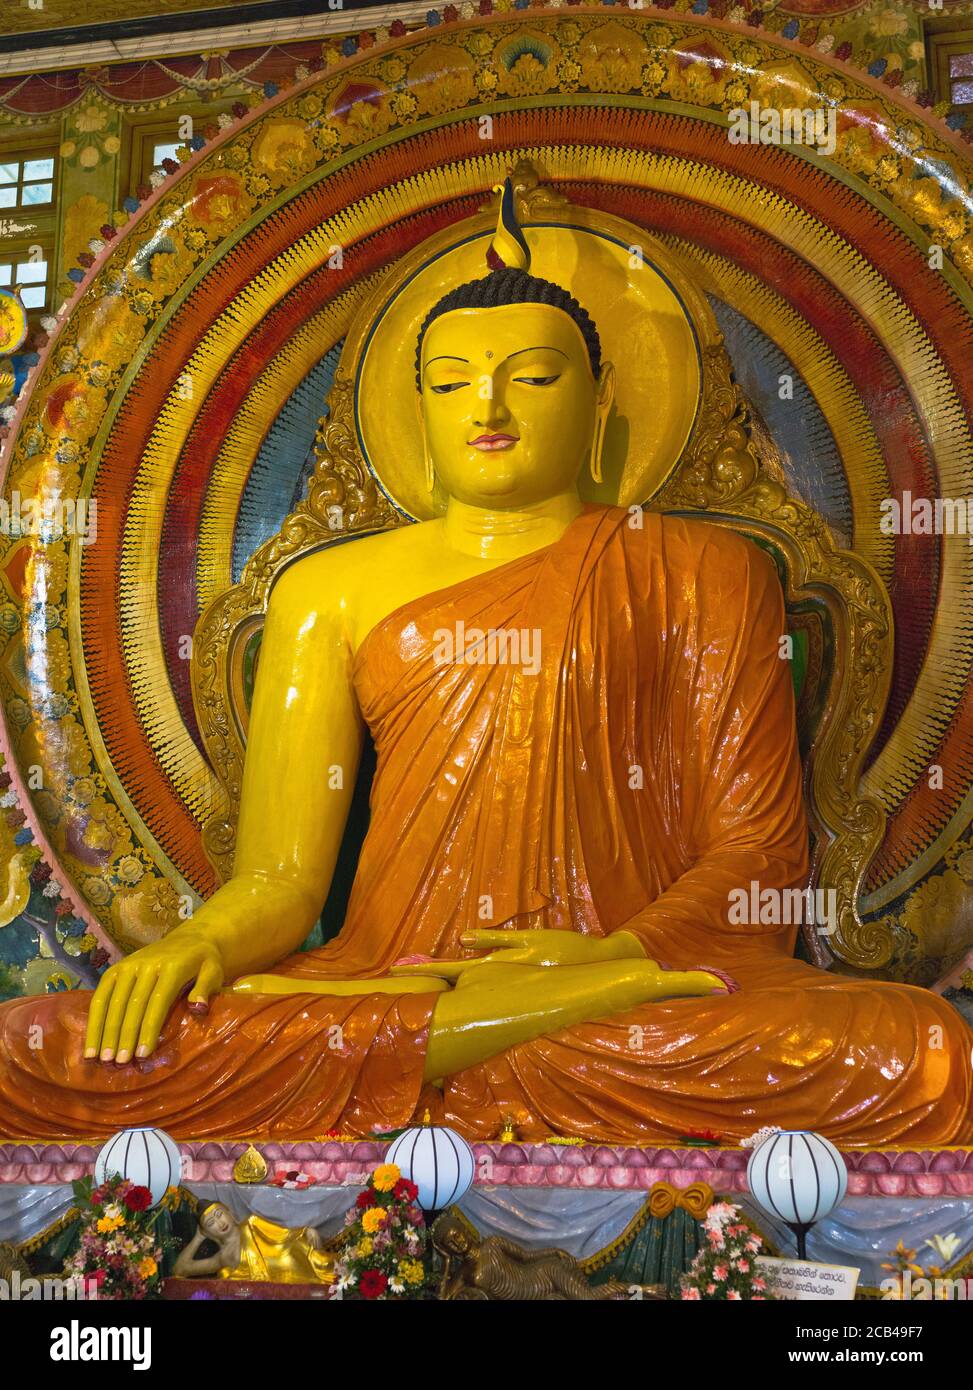 dh Gangaramaya Buddhistischer Tempel COLOMBO STADT SRI LANKA Tempel groß buddha Statue Schrein Stockfoto